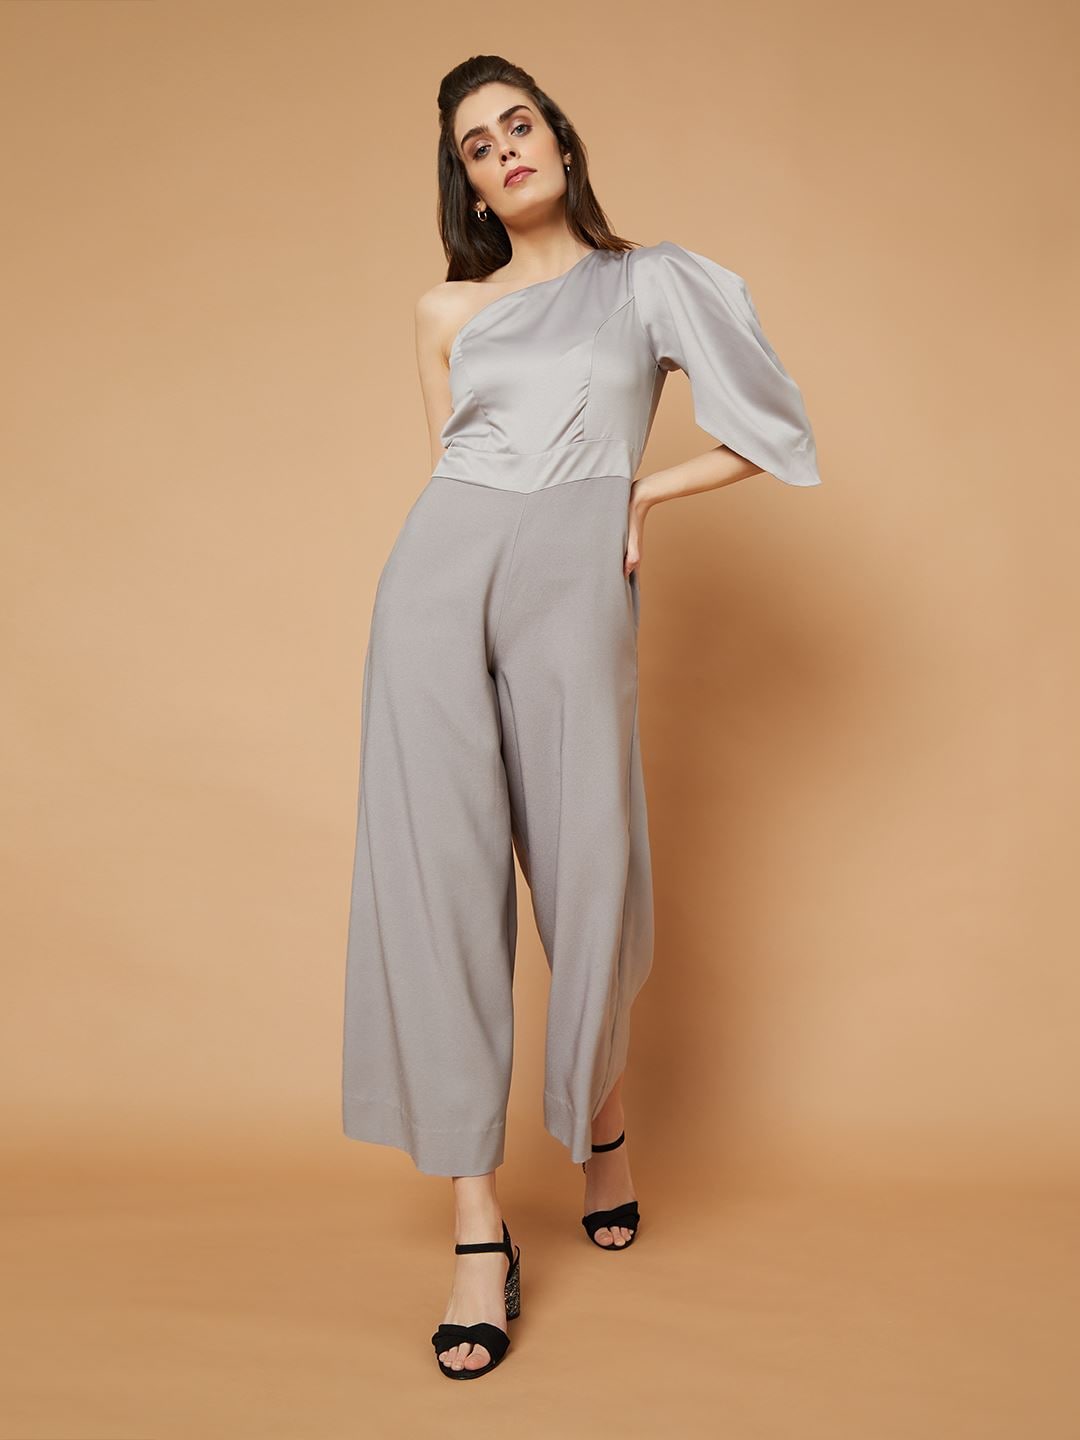 Vero Moda Grey Basic Jumpsuit Price in India